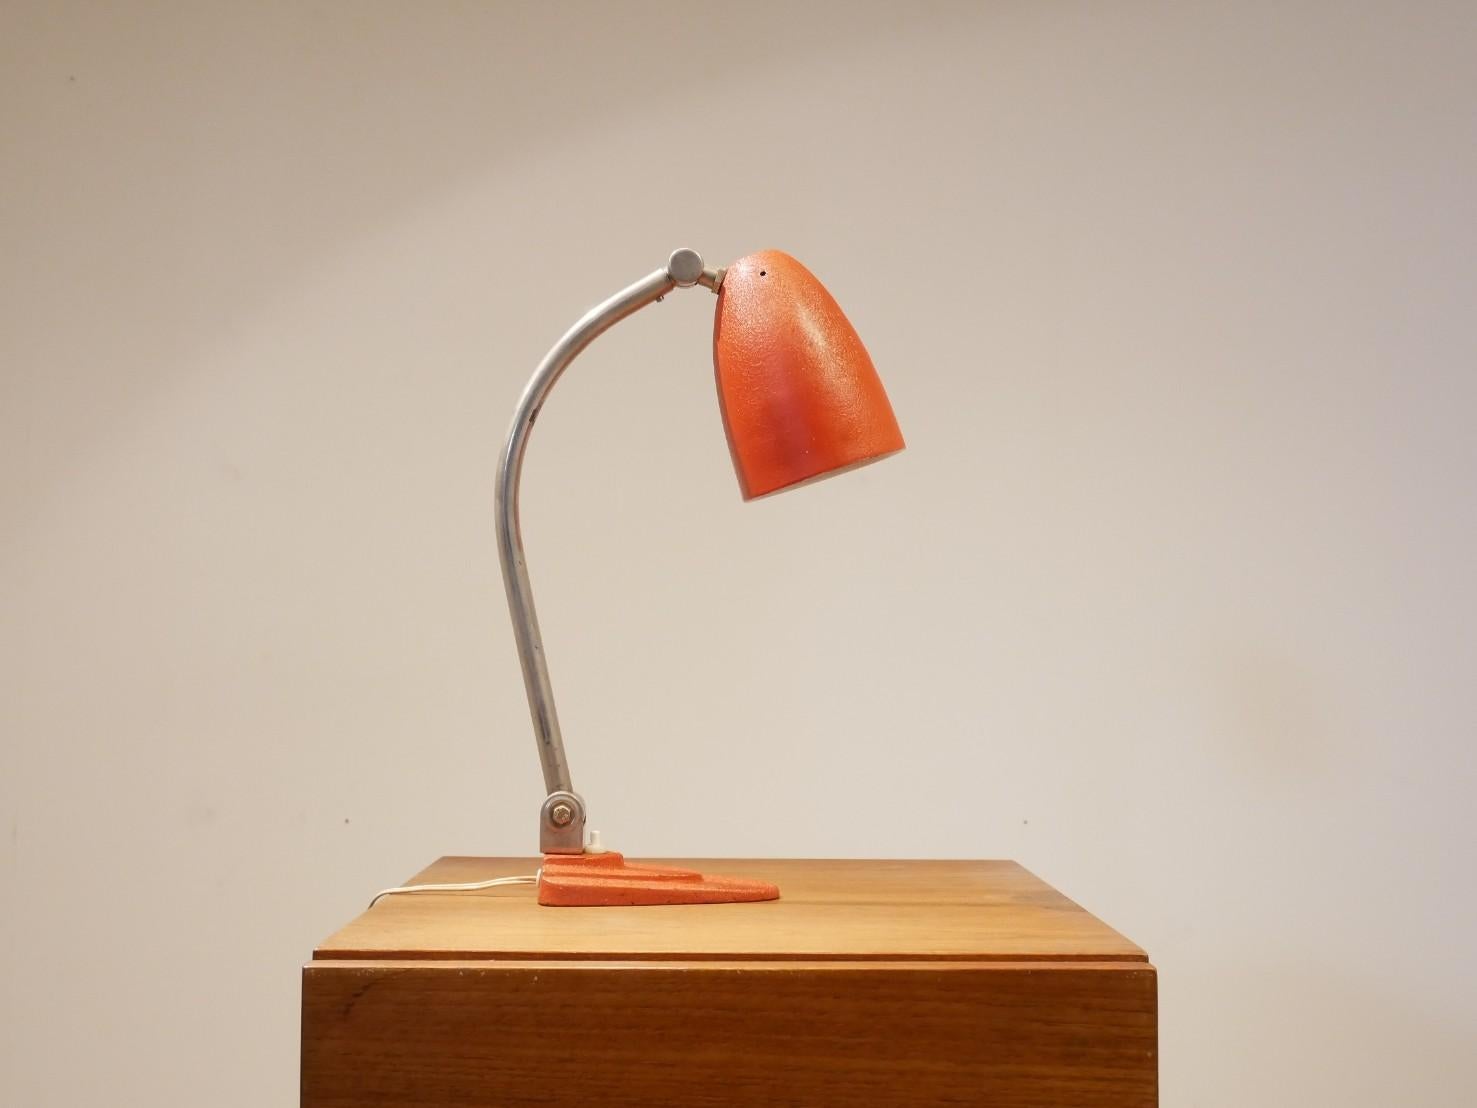 Bauhaus Period Red Gispen Desk Lamp, 1920s For Sale 1